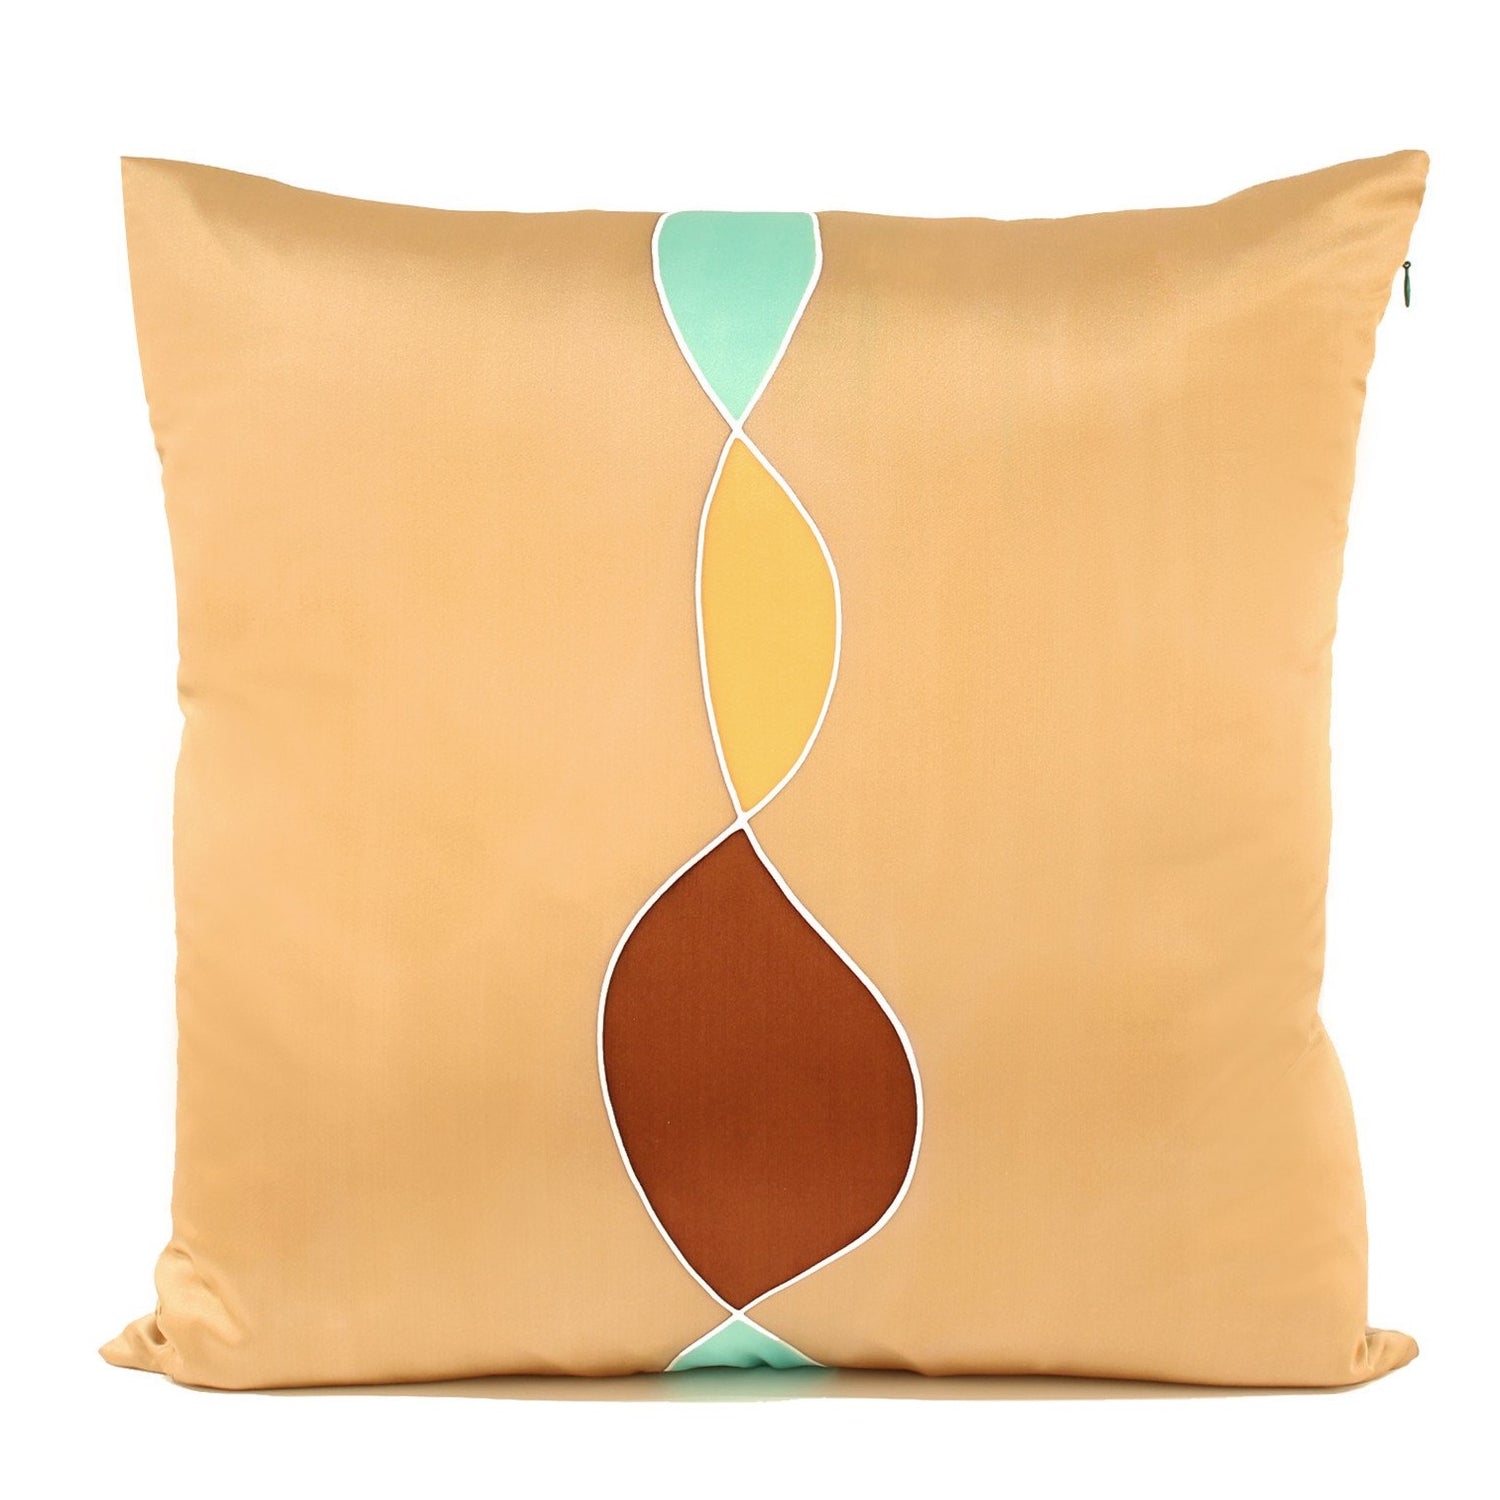 Decorative Pillow by designer German Valdivia 